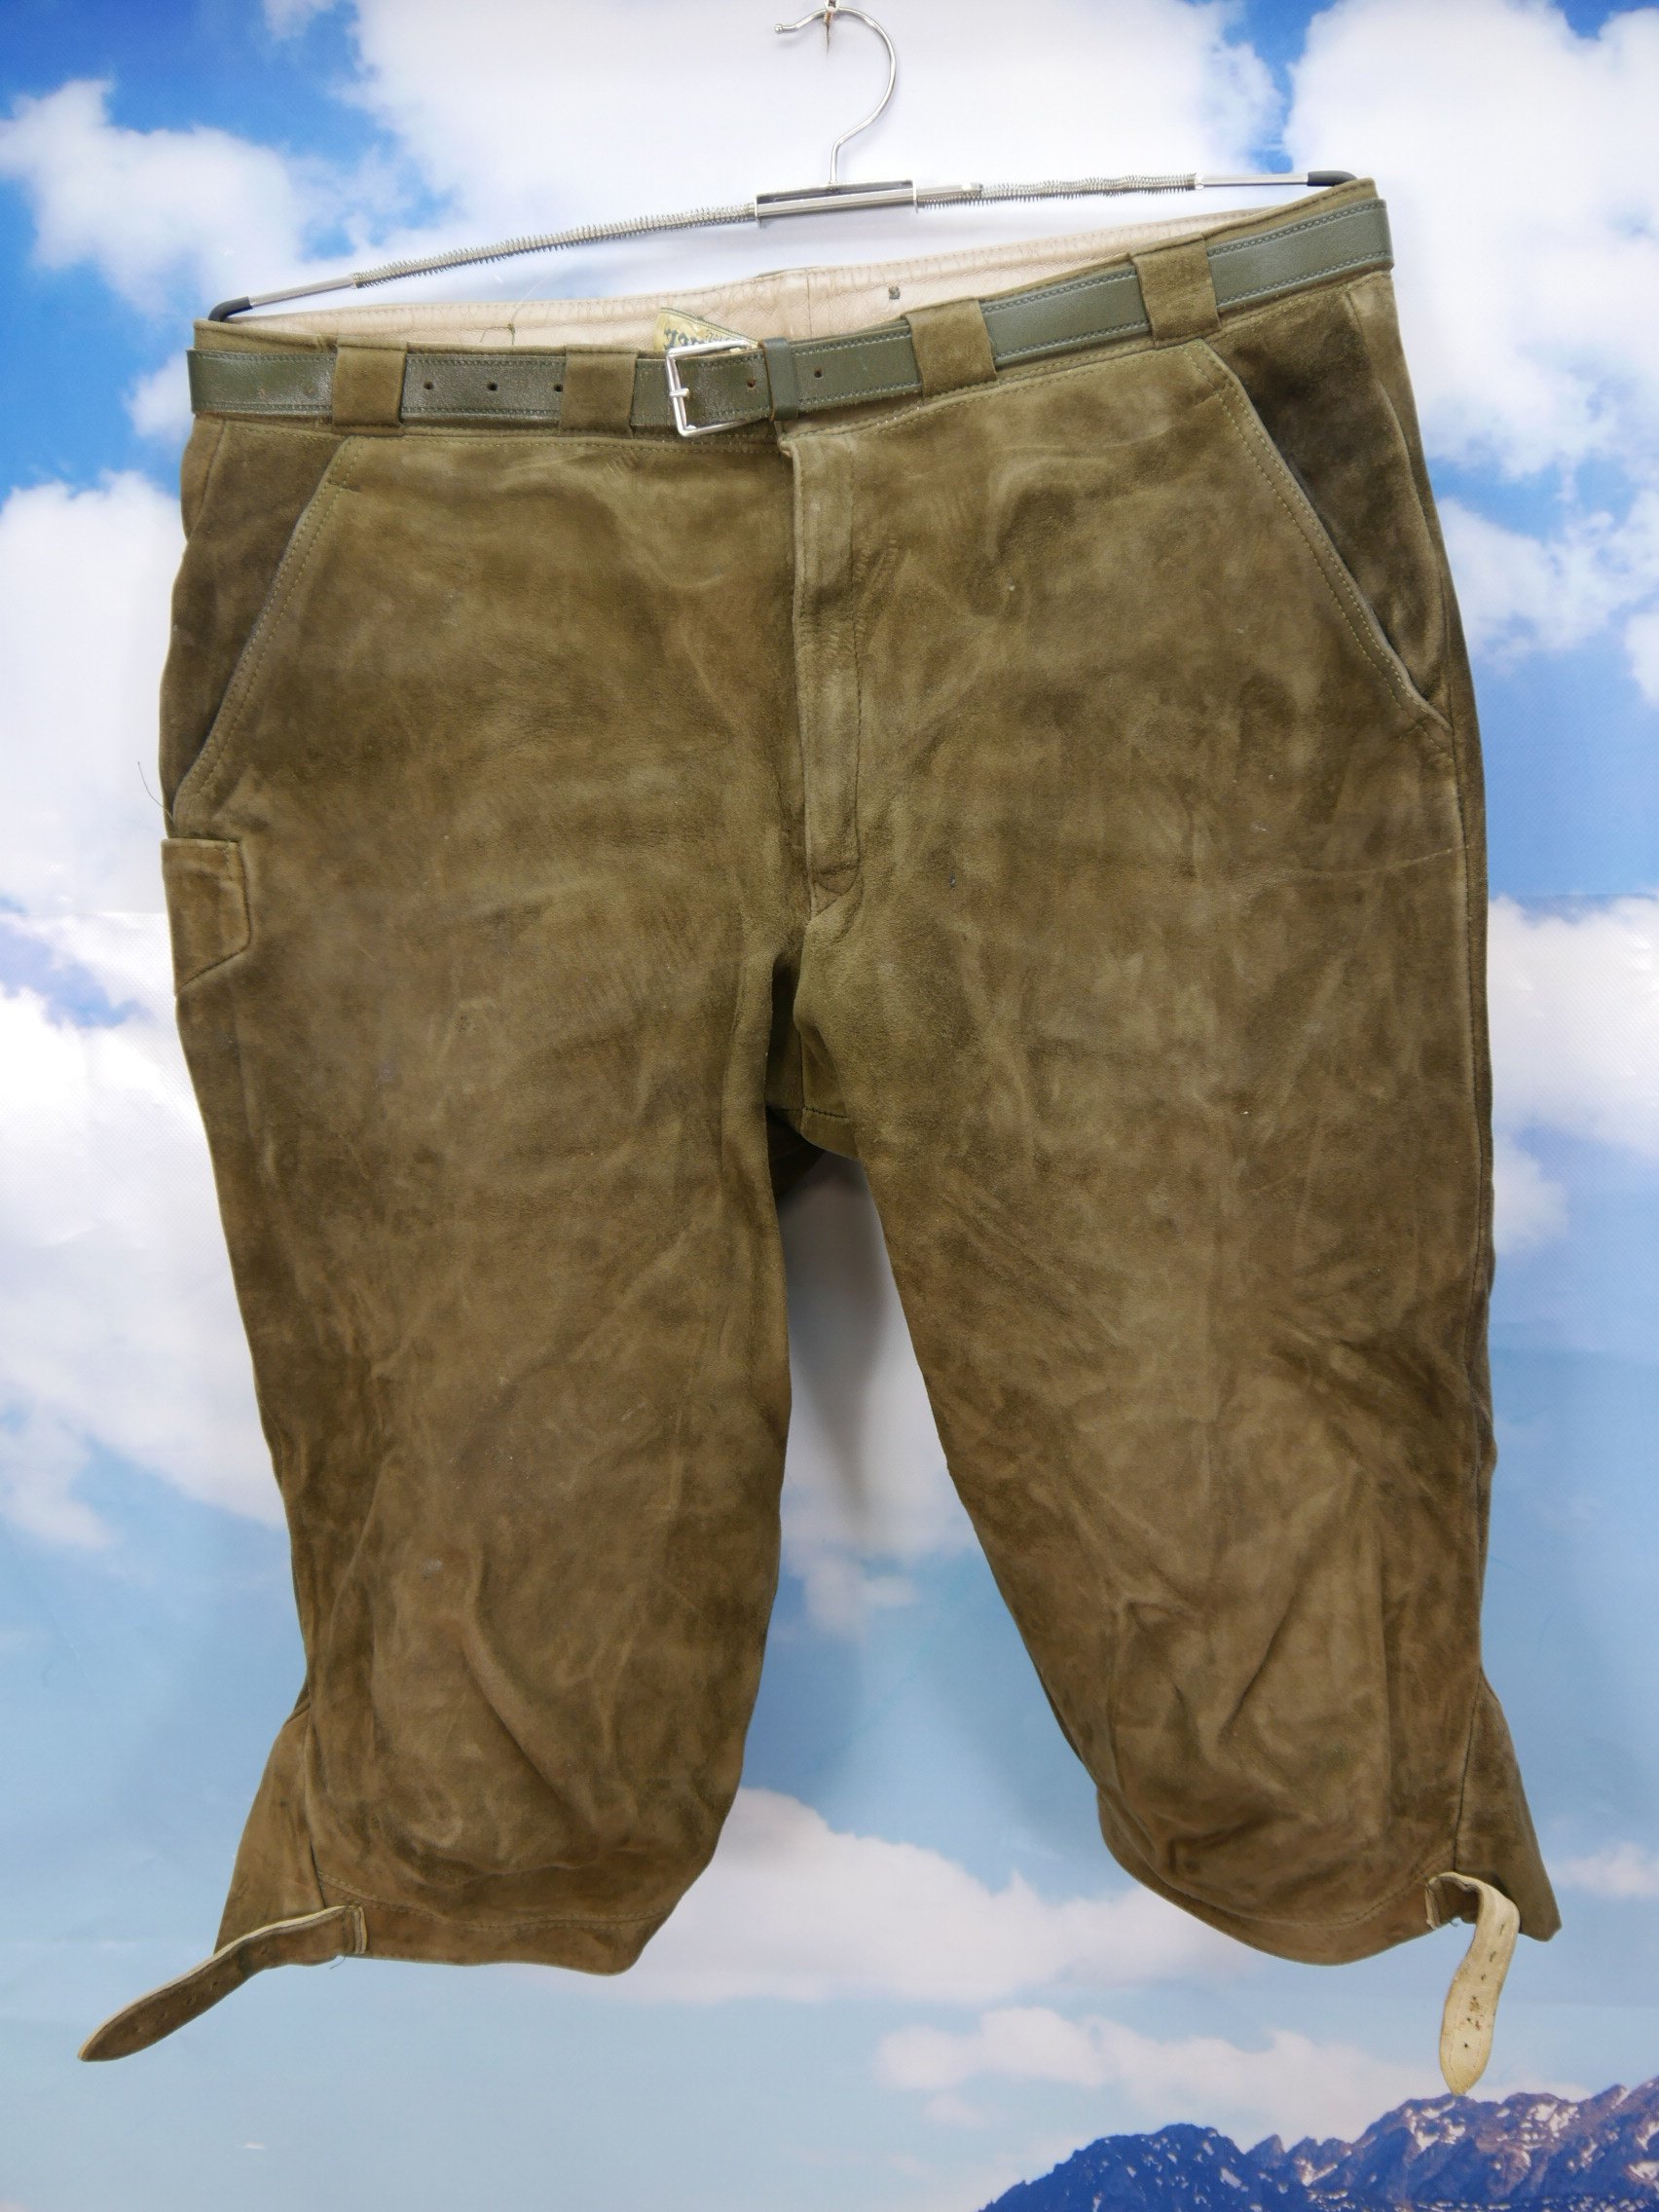 Eduard Kettner quality goods knee waistband hunting leather pants nice ...